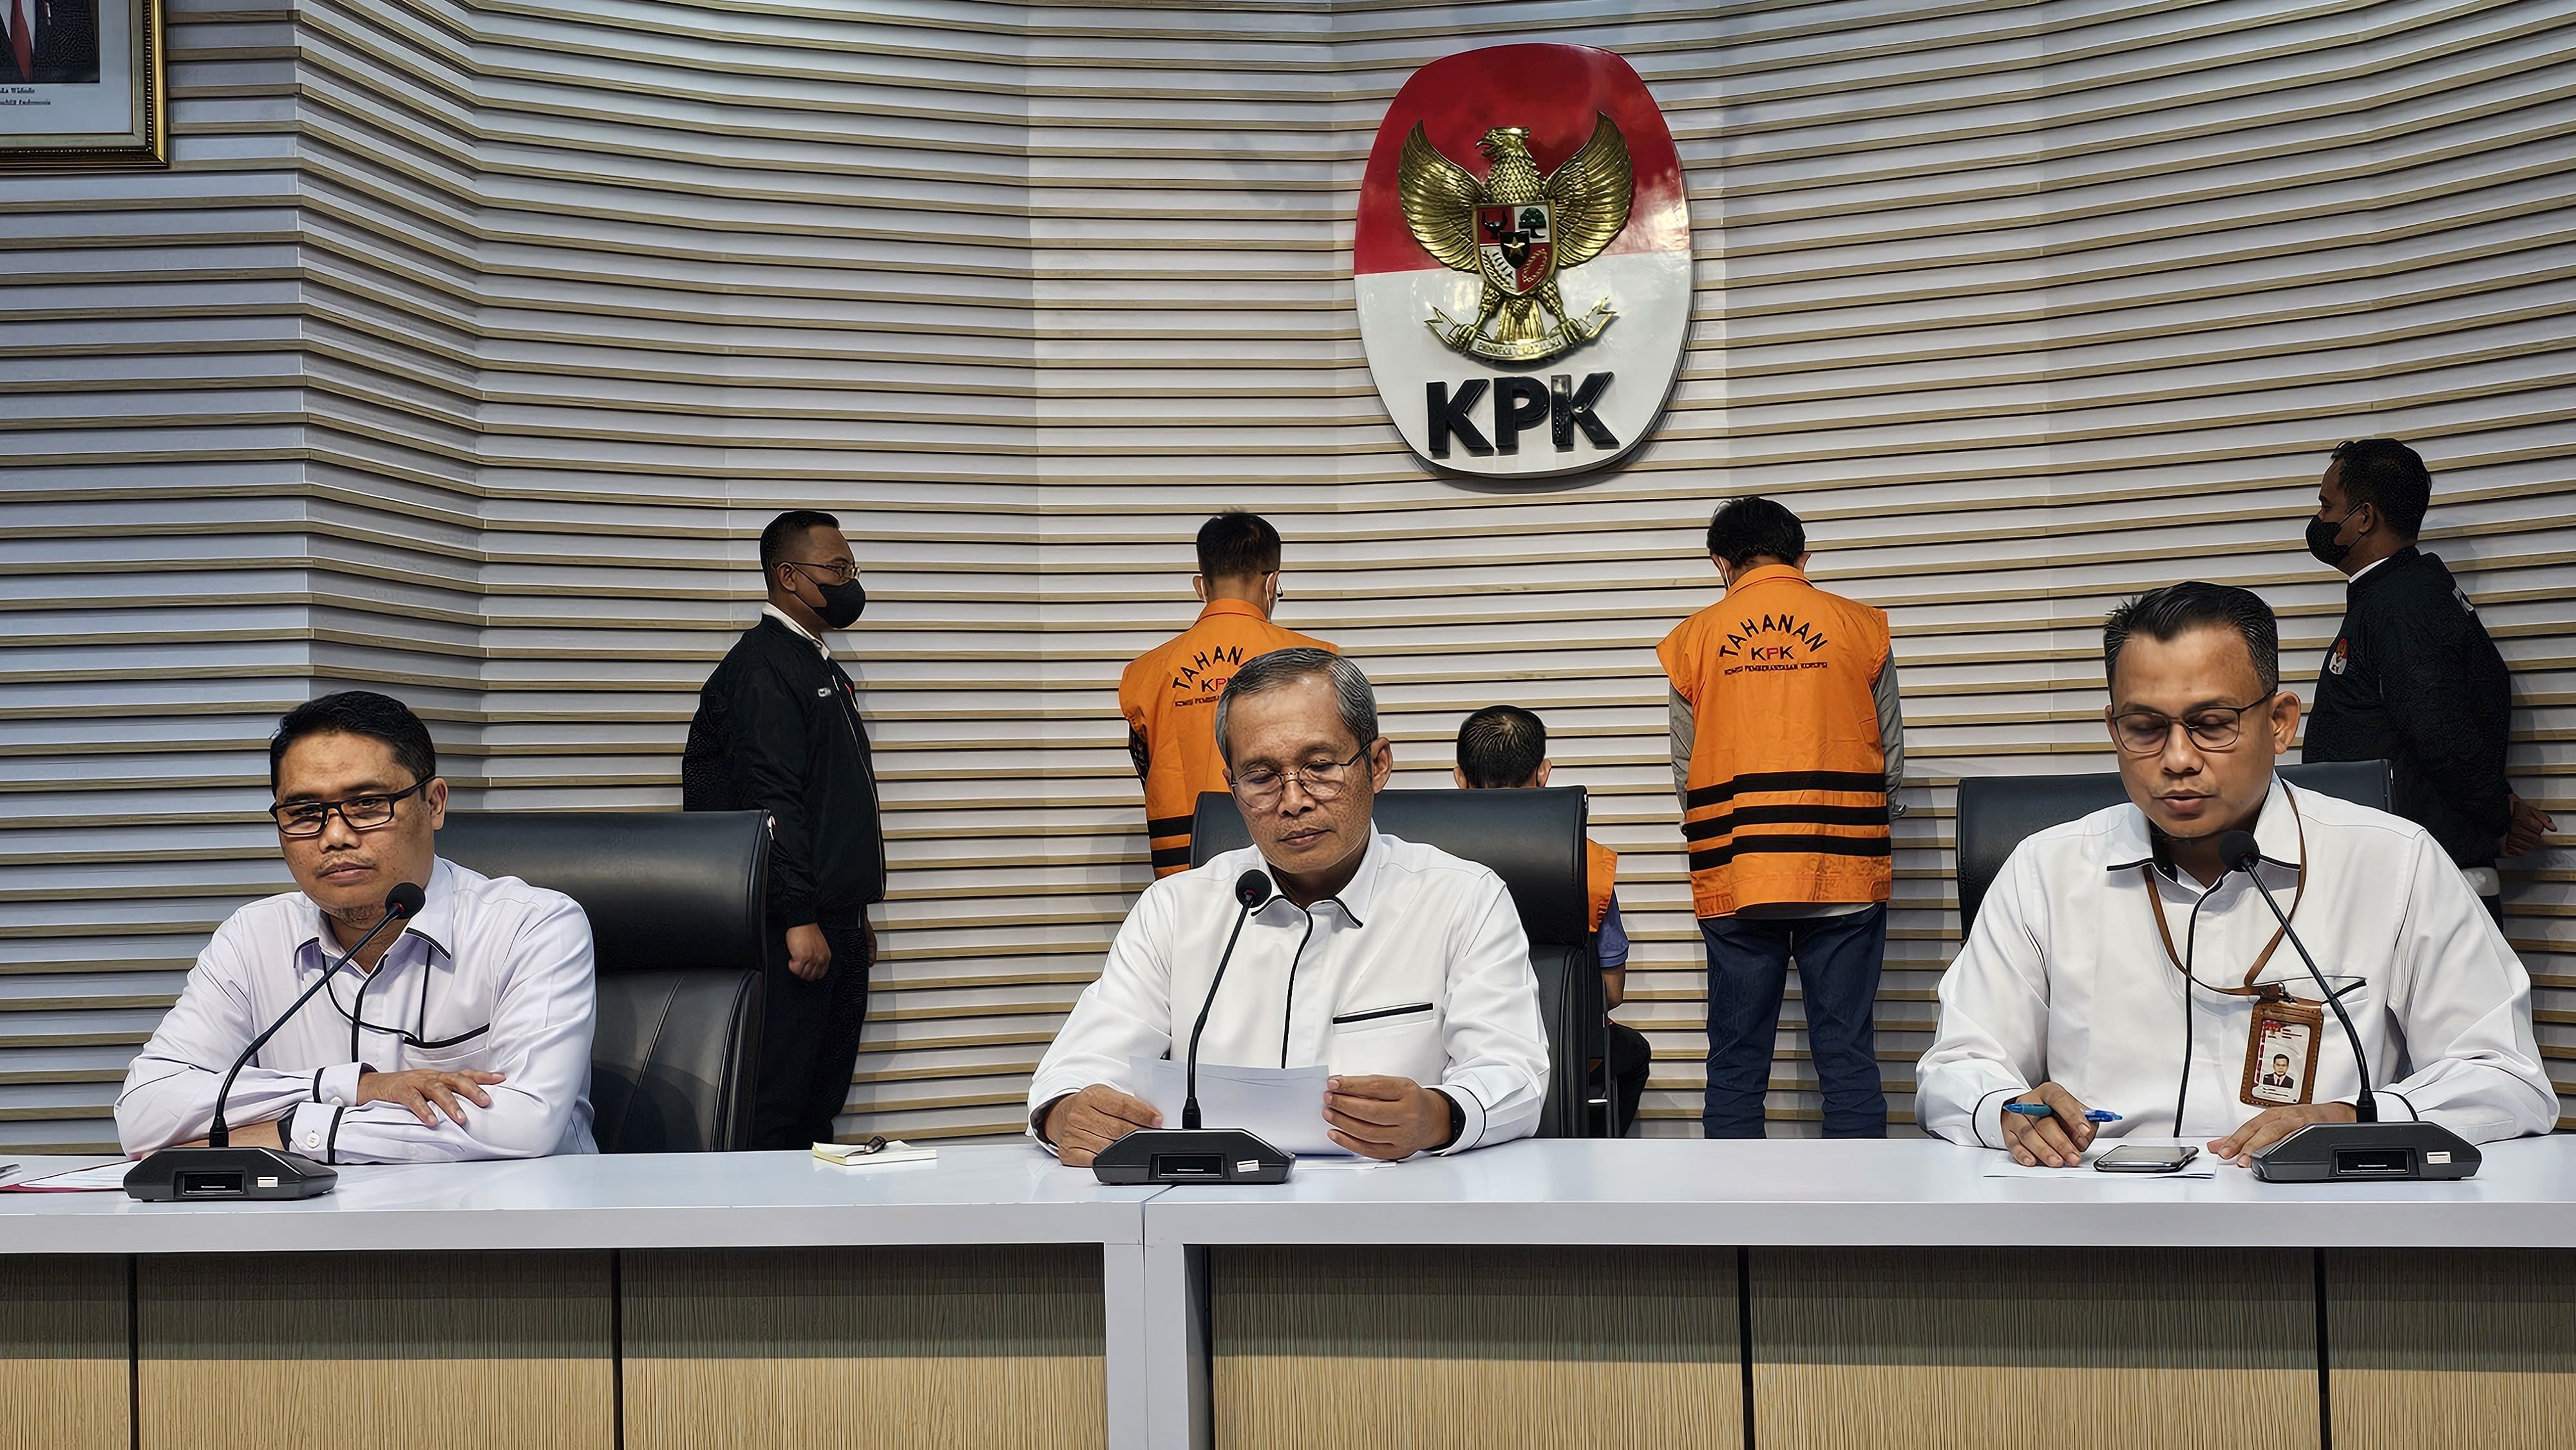 KPK tahaneks Direktur Utama PT Perkebunan Nusantara atau PTPN XI, Mochamad Cholidi terkait kasus korupsi (SinPo.id/david)